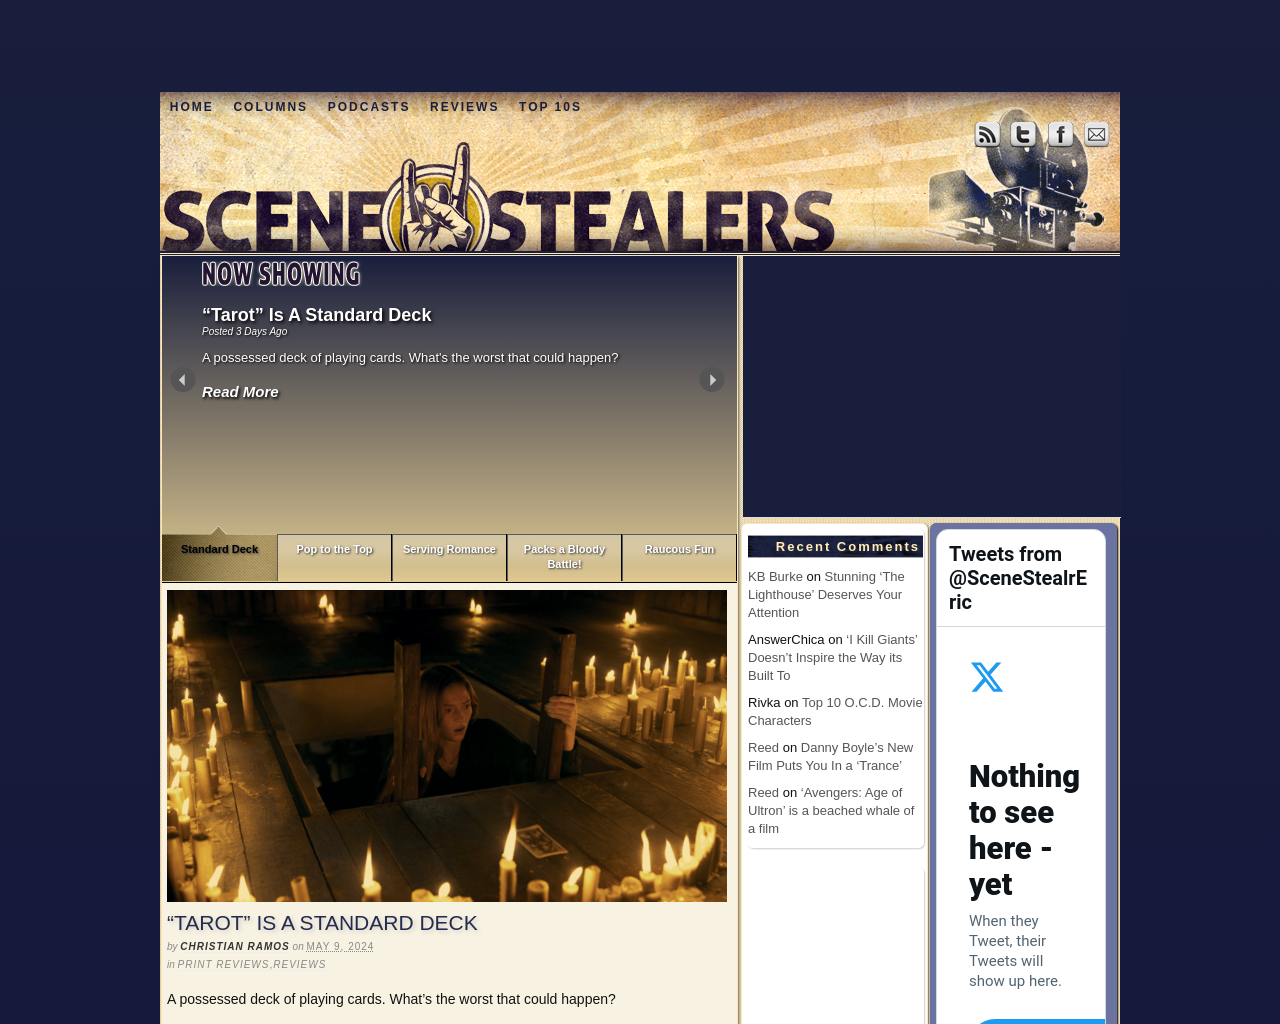 scene-stealers.com